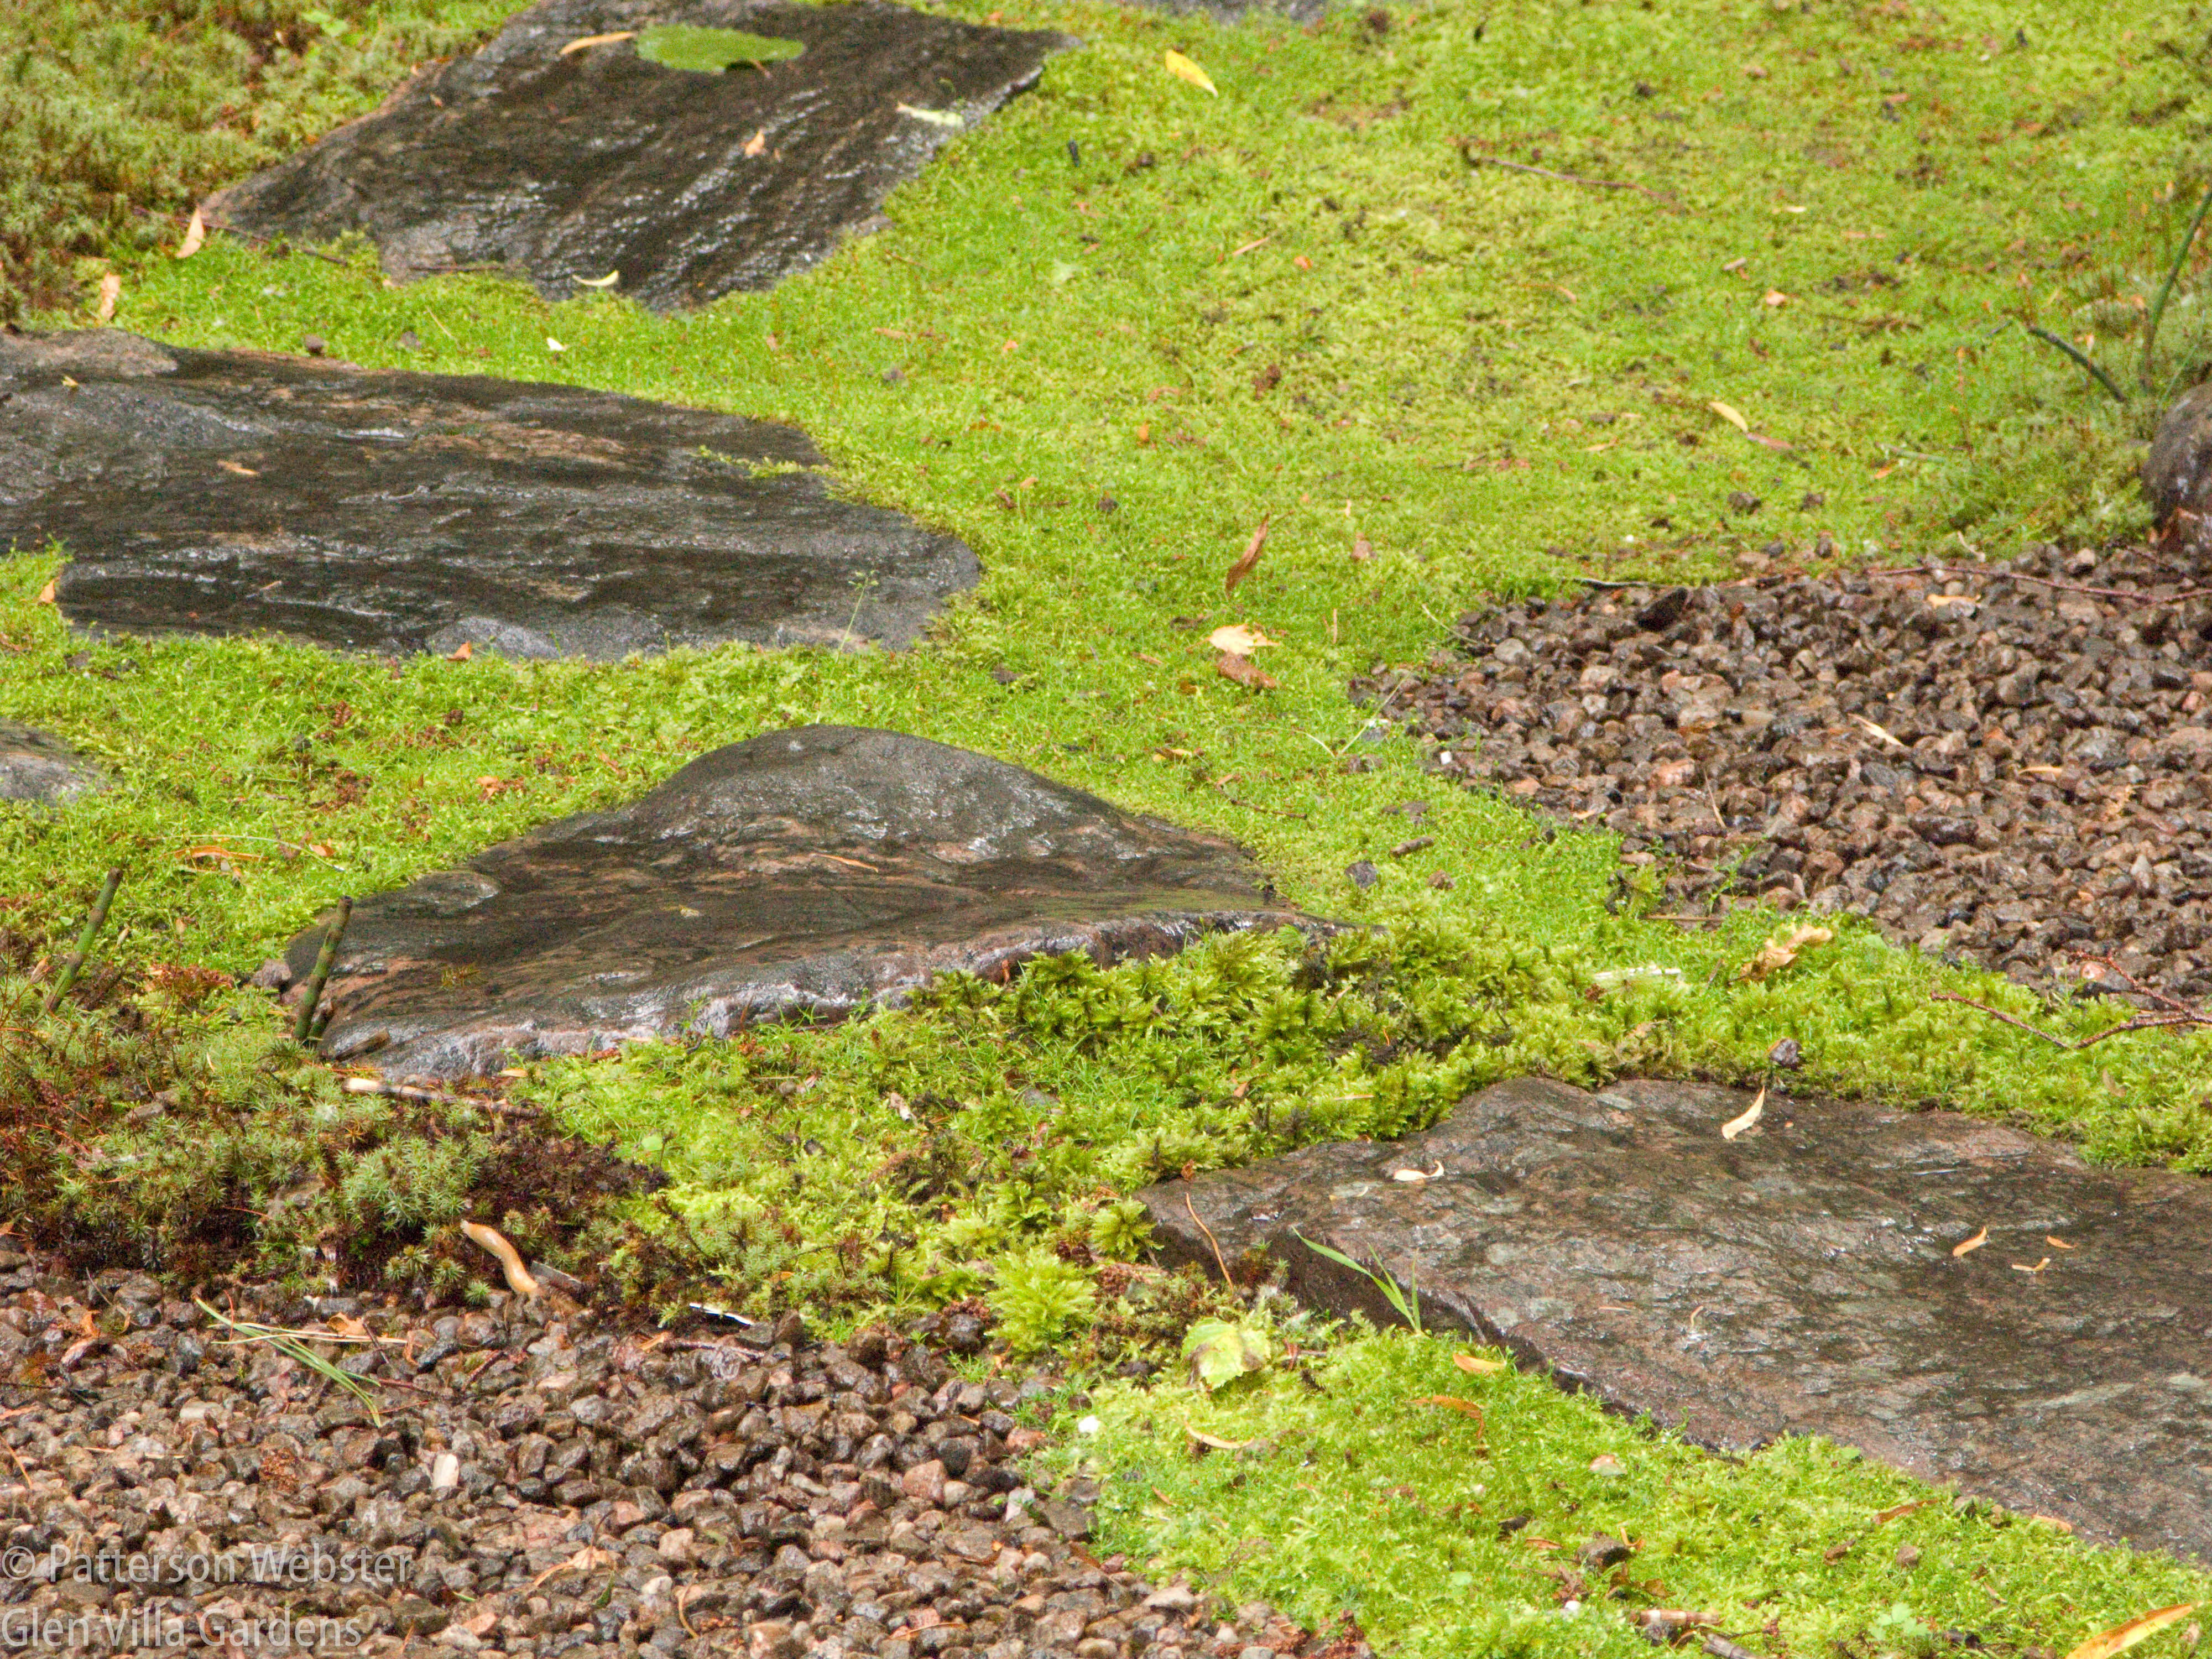 Stones in the Japanese garden at Les Quatre Vents